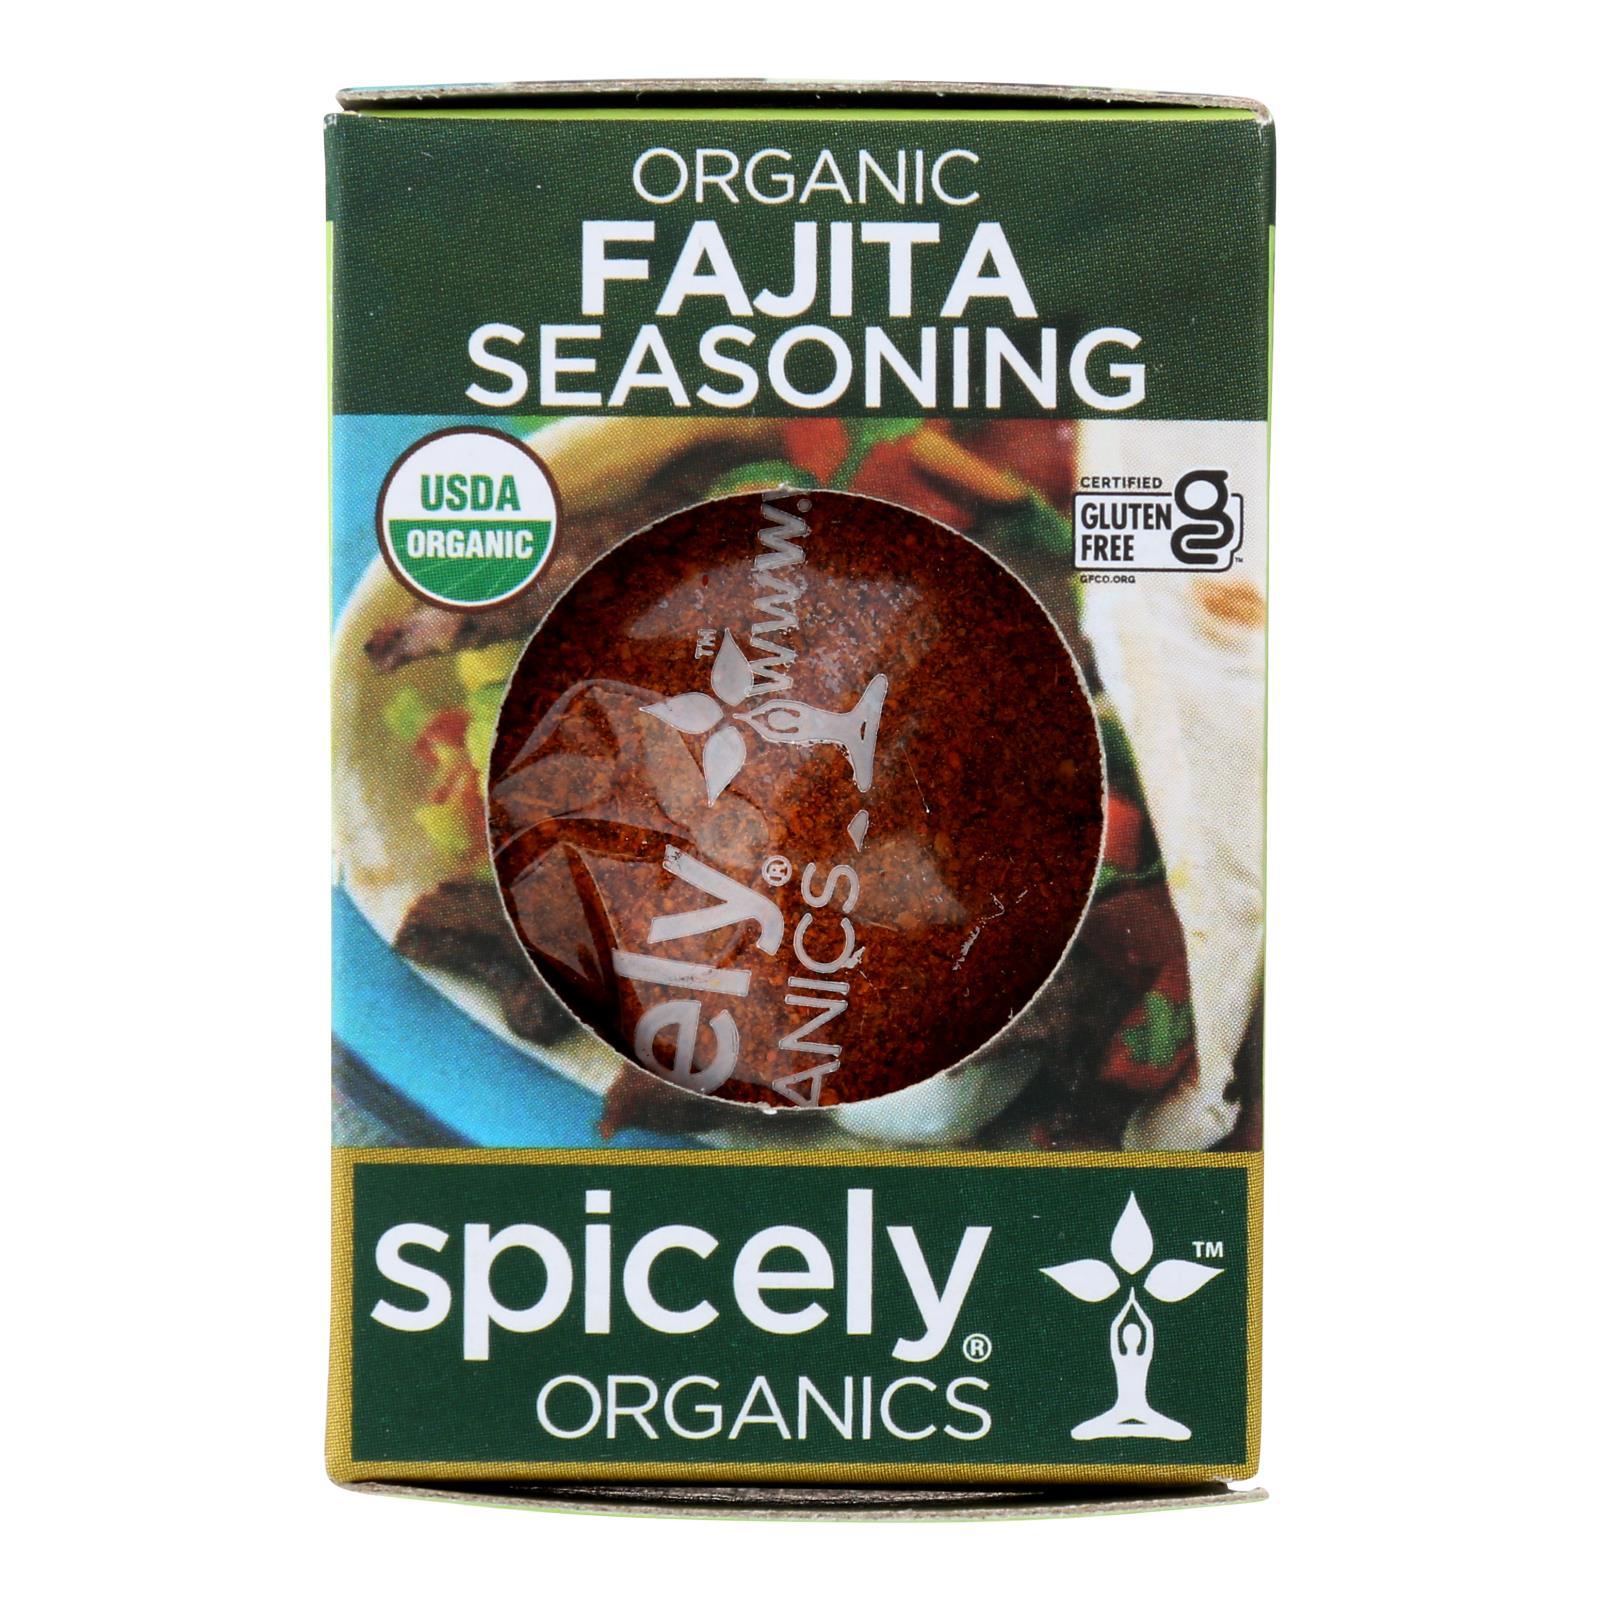 Spicely Organics Rebel Green, All Purpose Spray, Peppermint & Lemon, 16 oz